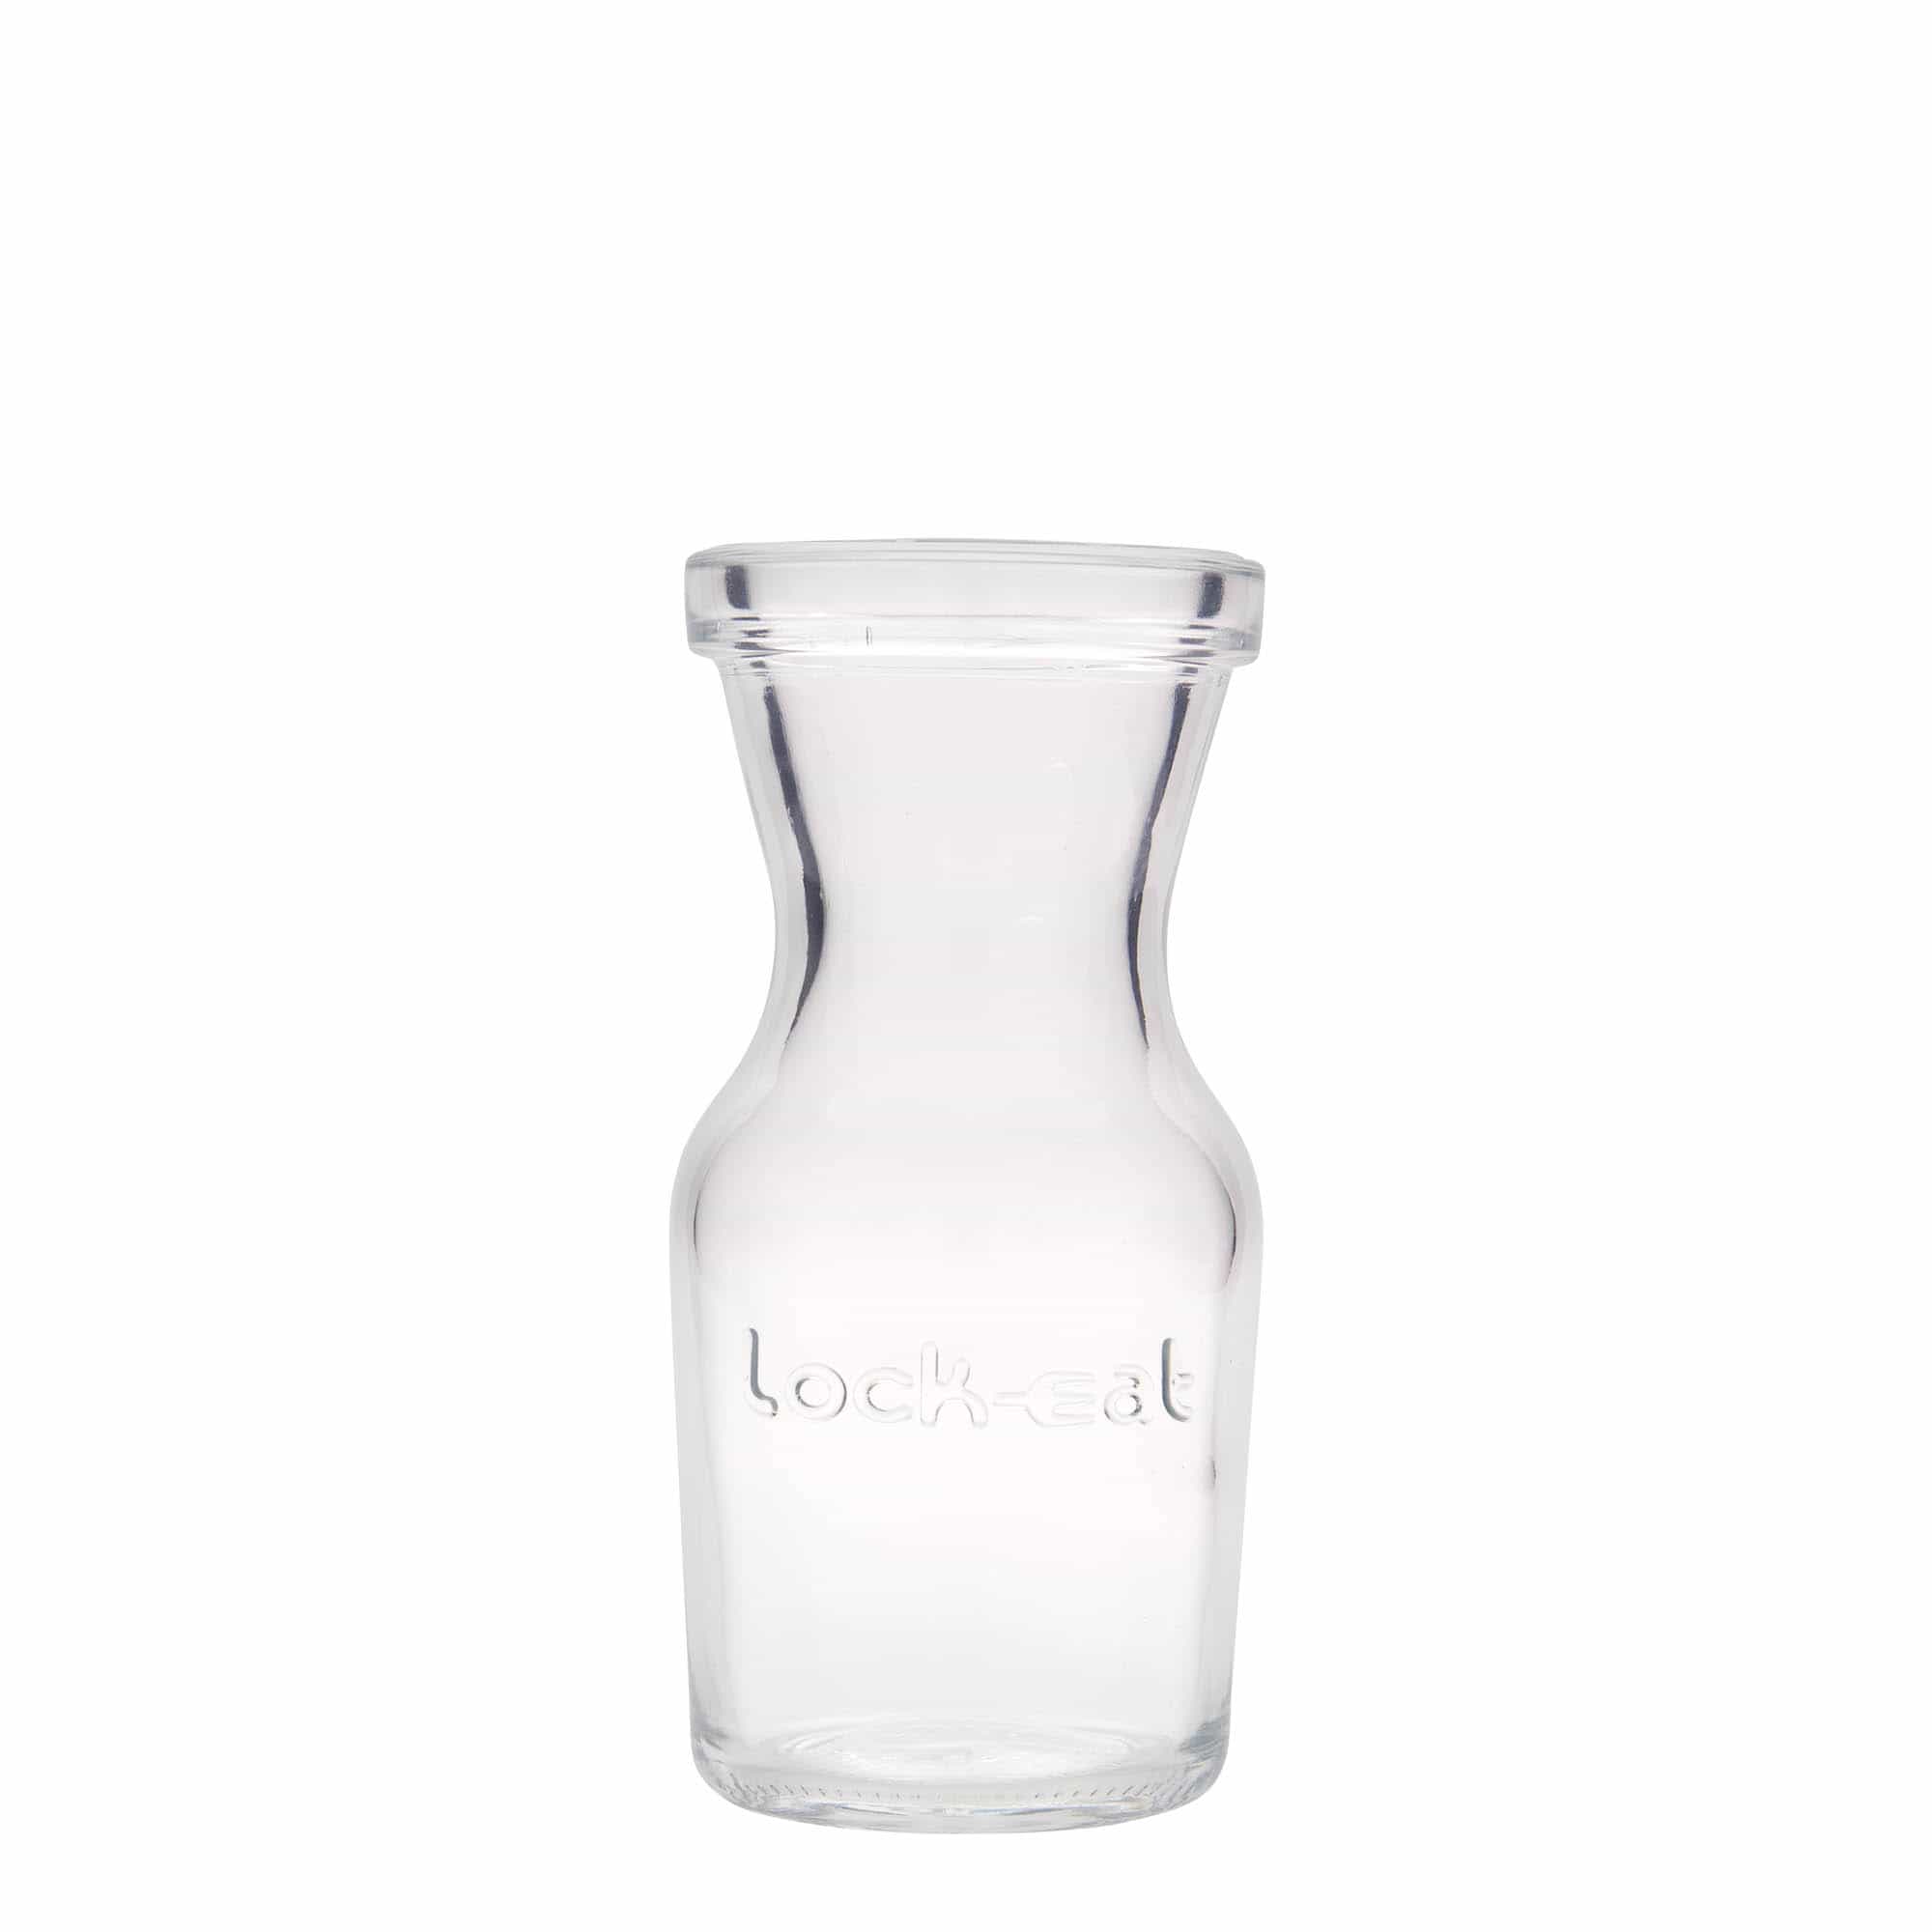 250 ml glass carafe 'Lock-Eat', closure: clip top